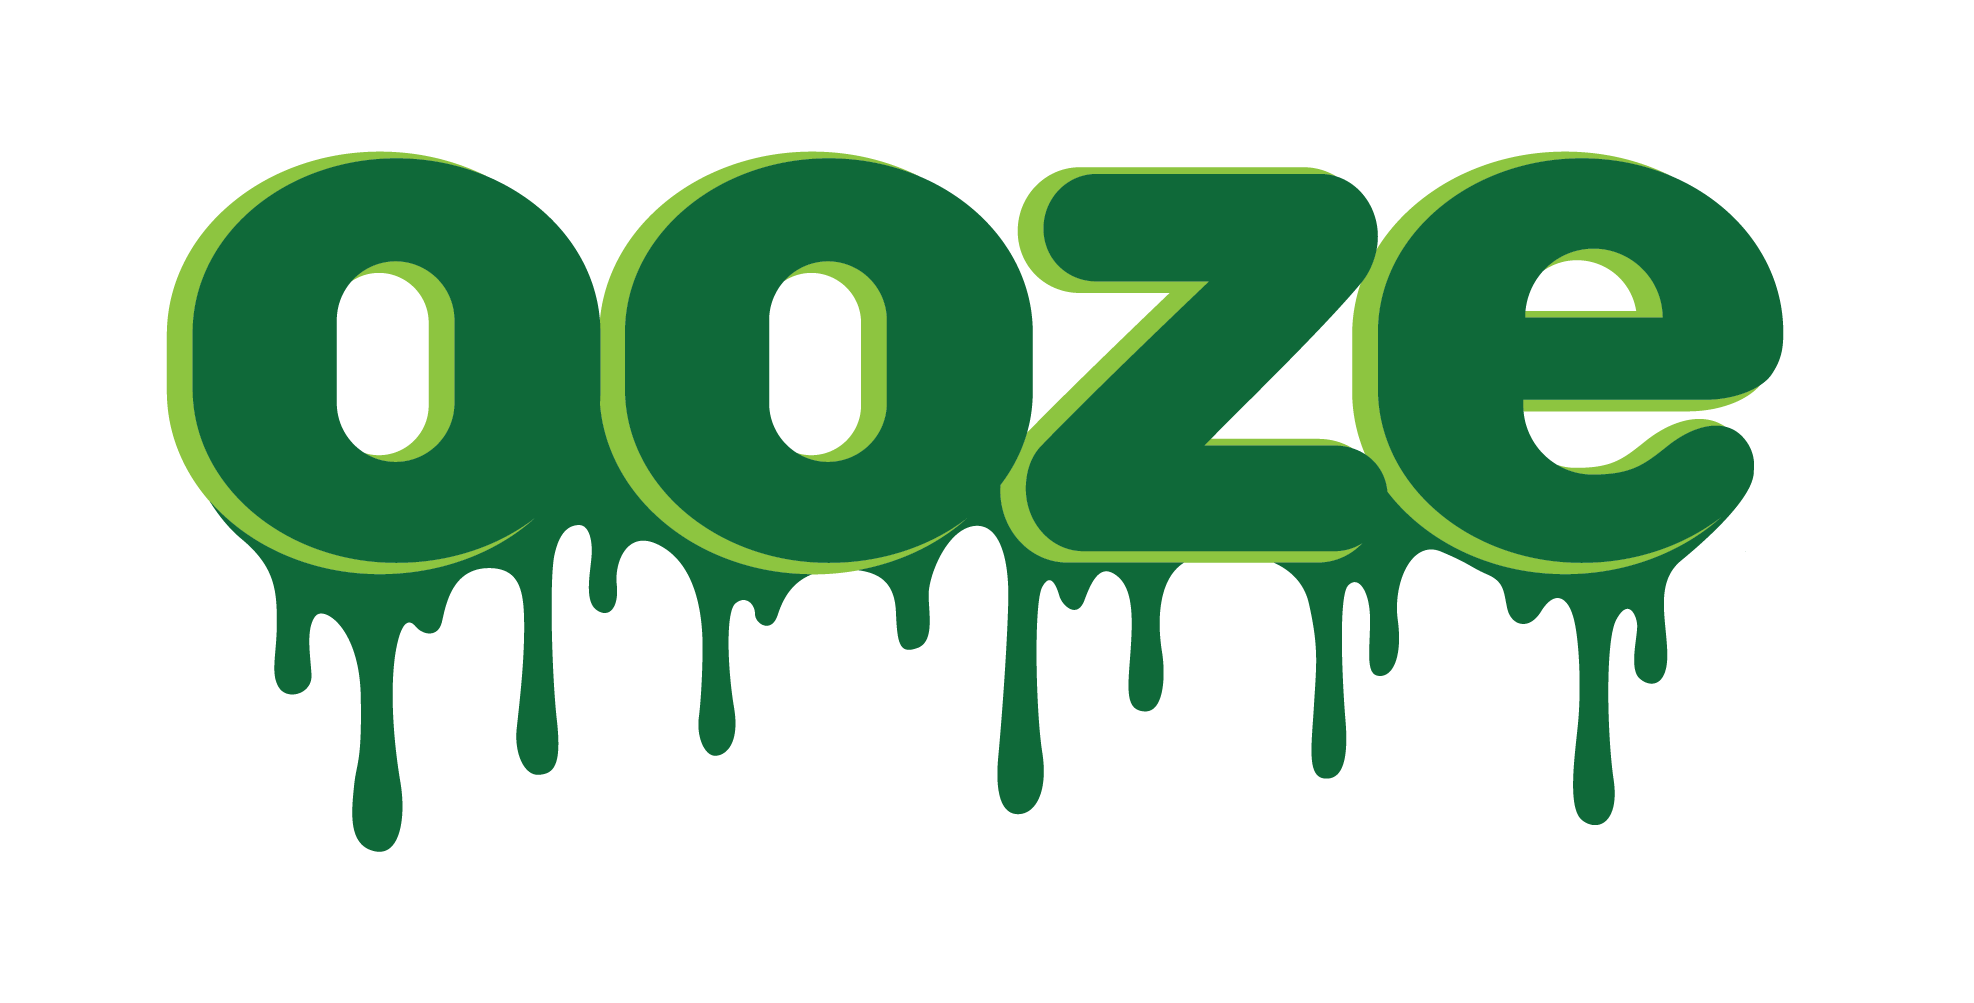 Ooze Logo.png